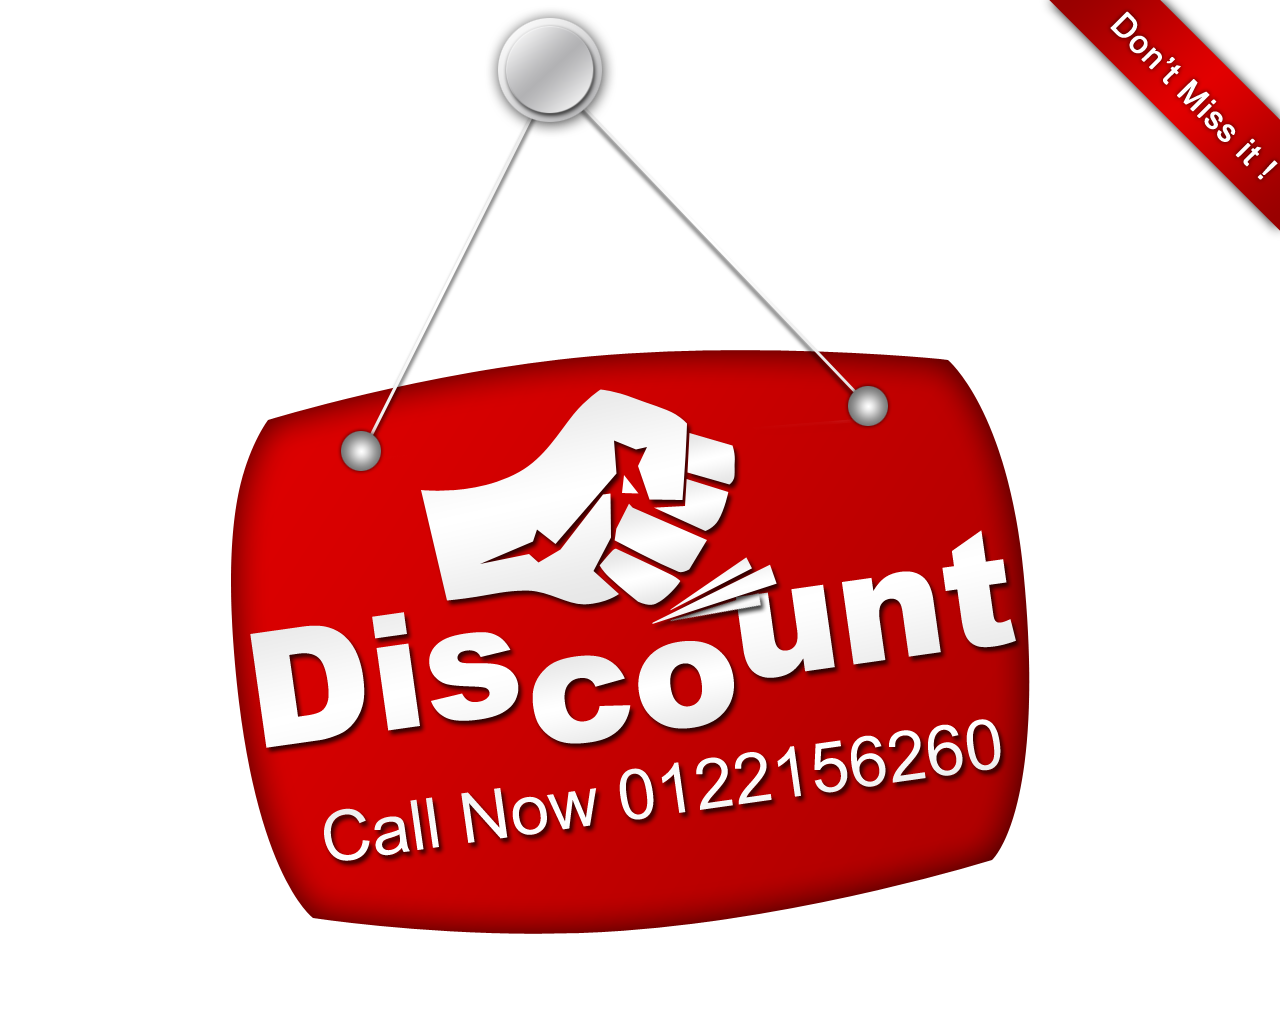 Discount PNG Transparent Discount.PNG Images. PlusPNG